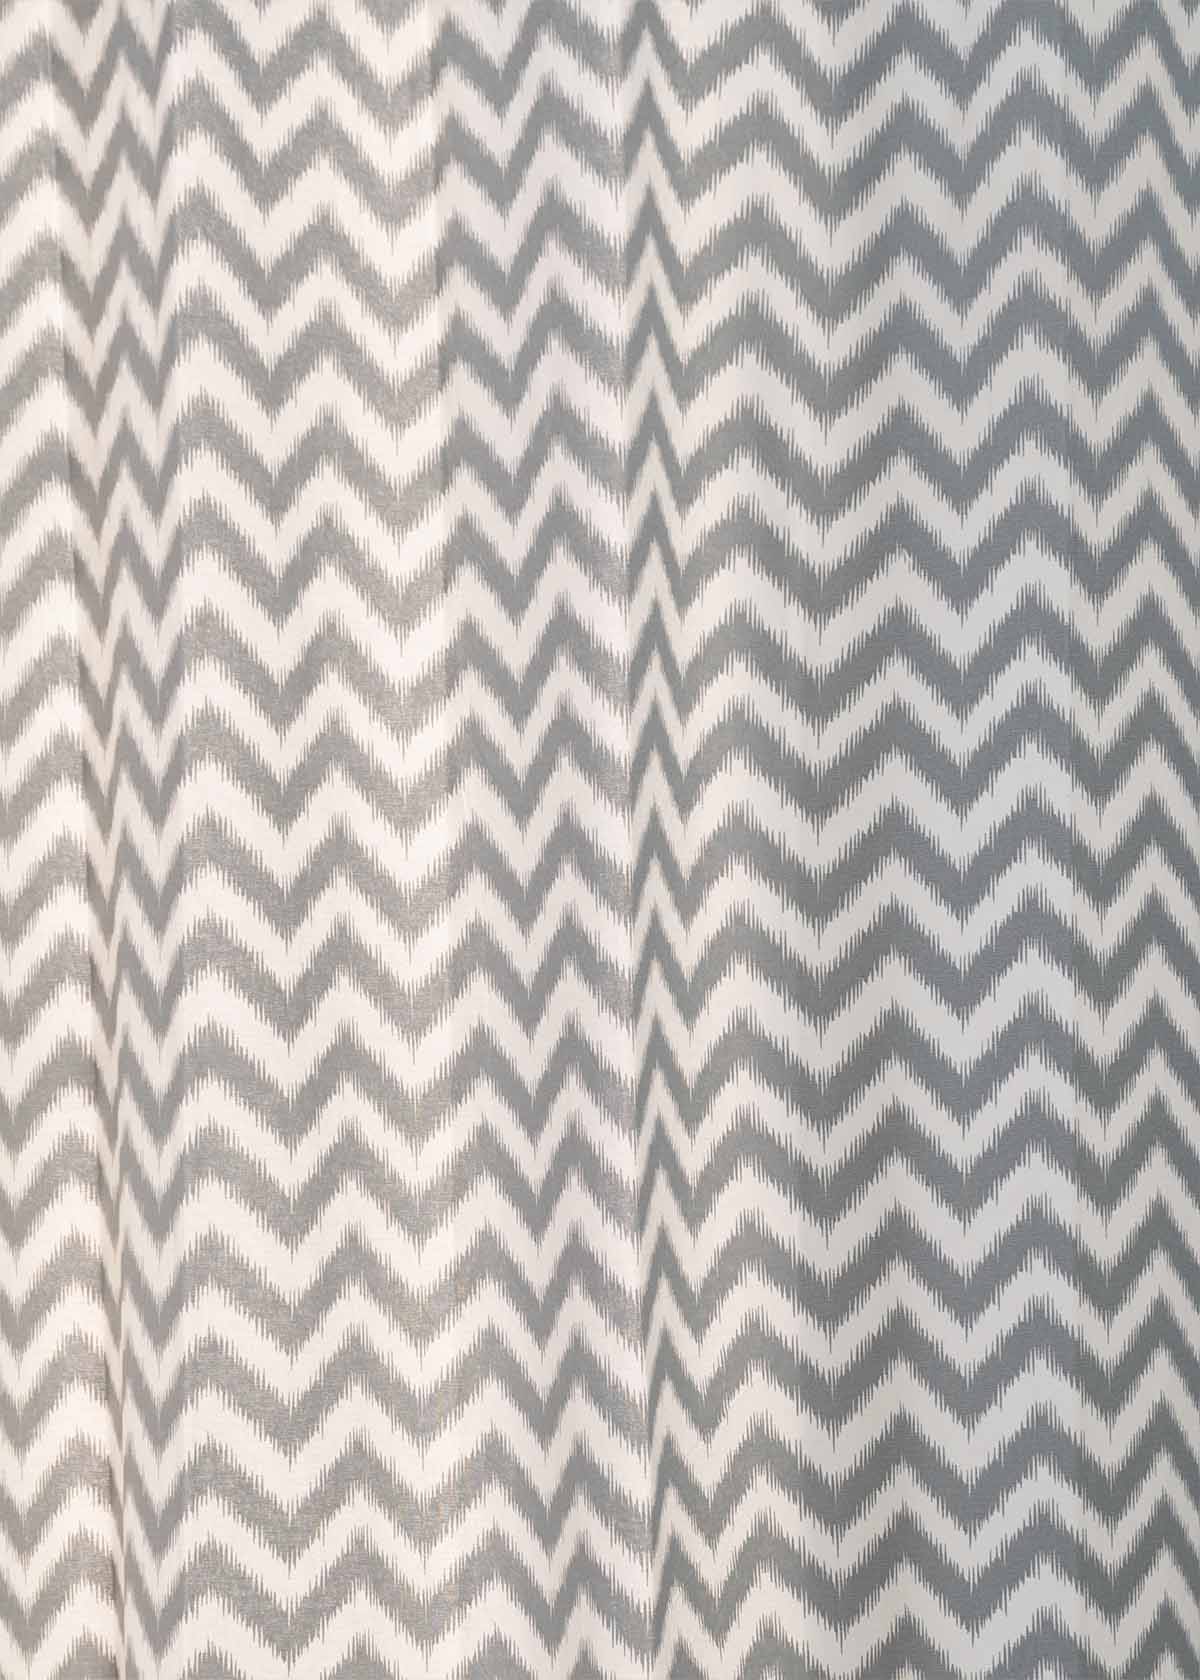 Ikat chevron printed cotton Fabric - Grey